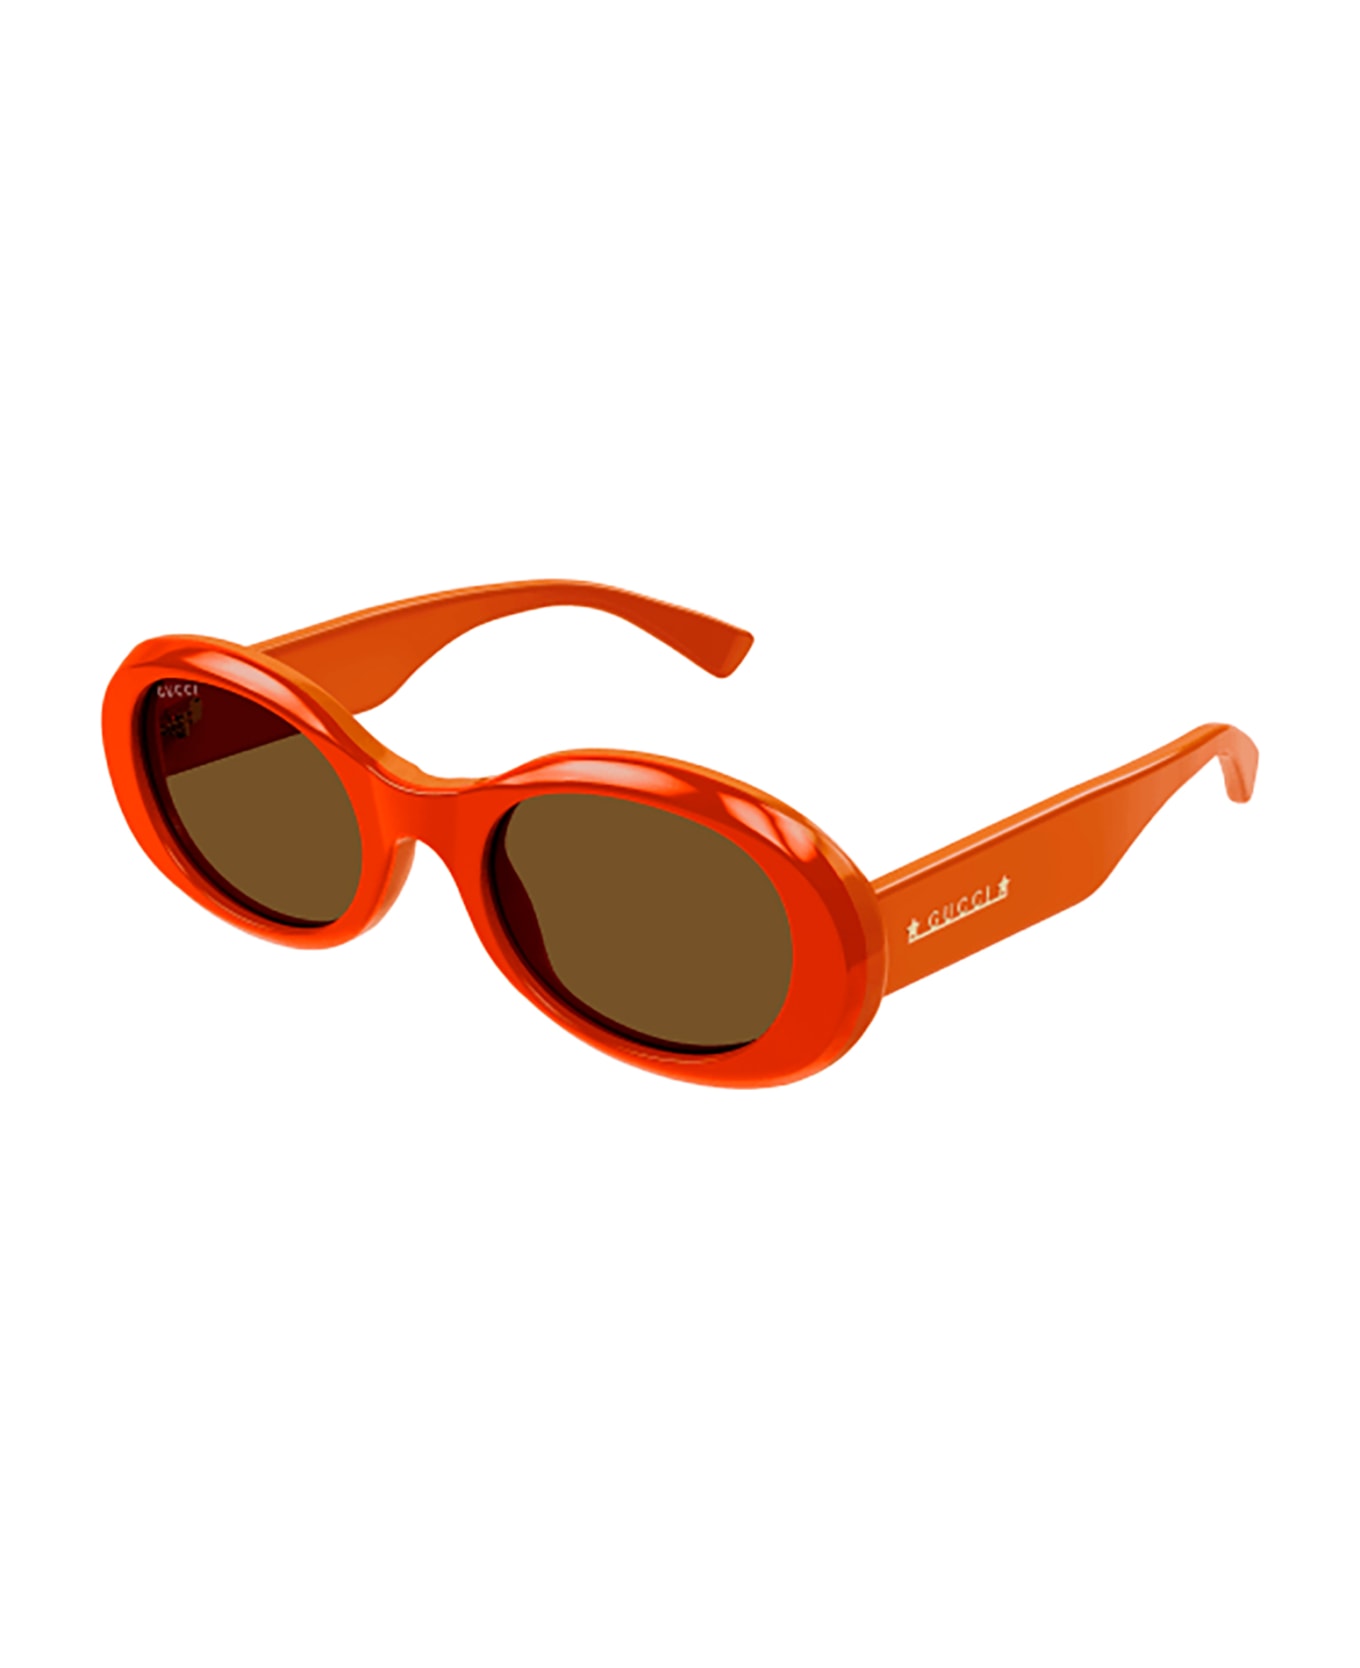 Gucci Eyewear GG1587S Sunglasses - Orange Orange Brown